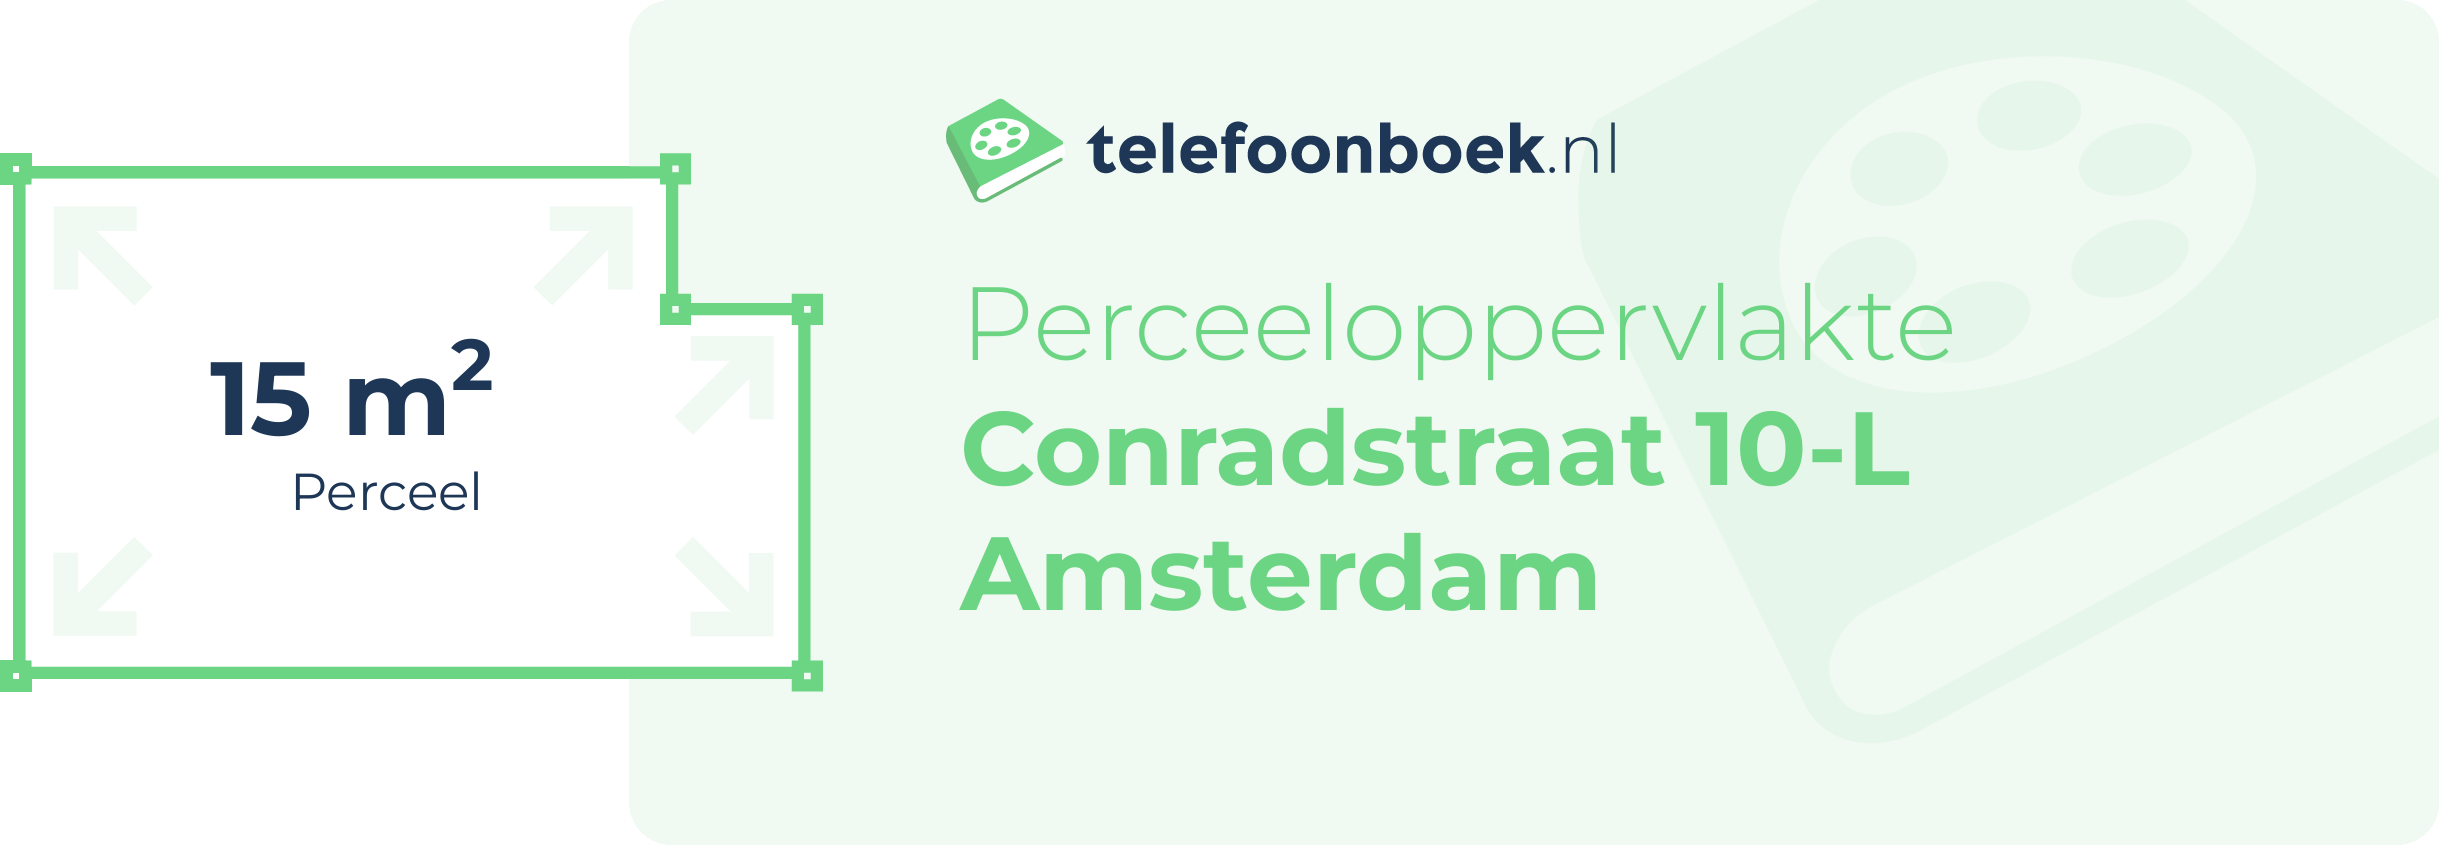 Perceeloppervlakte Conradstraat 10-L Amsterdam